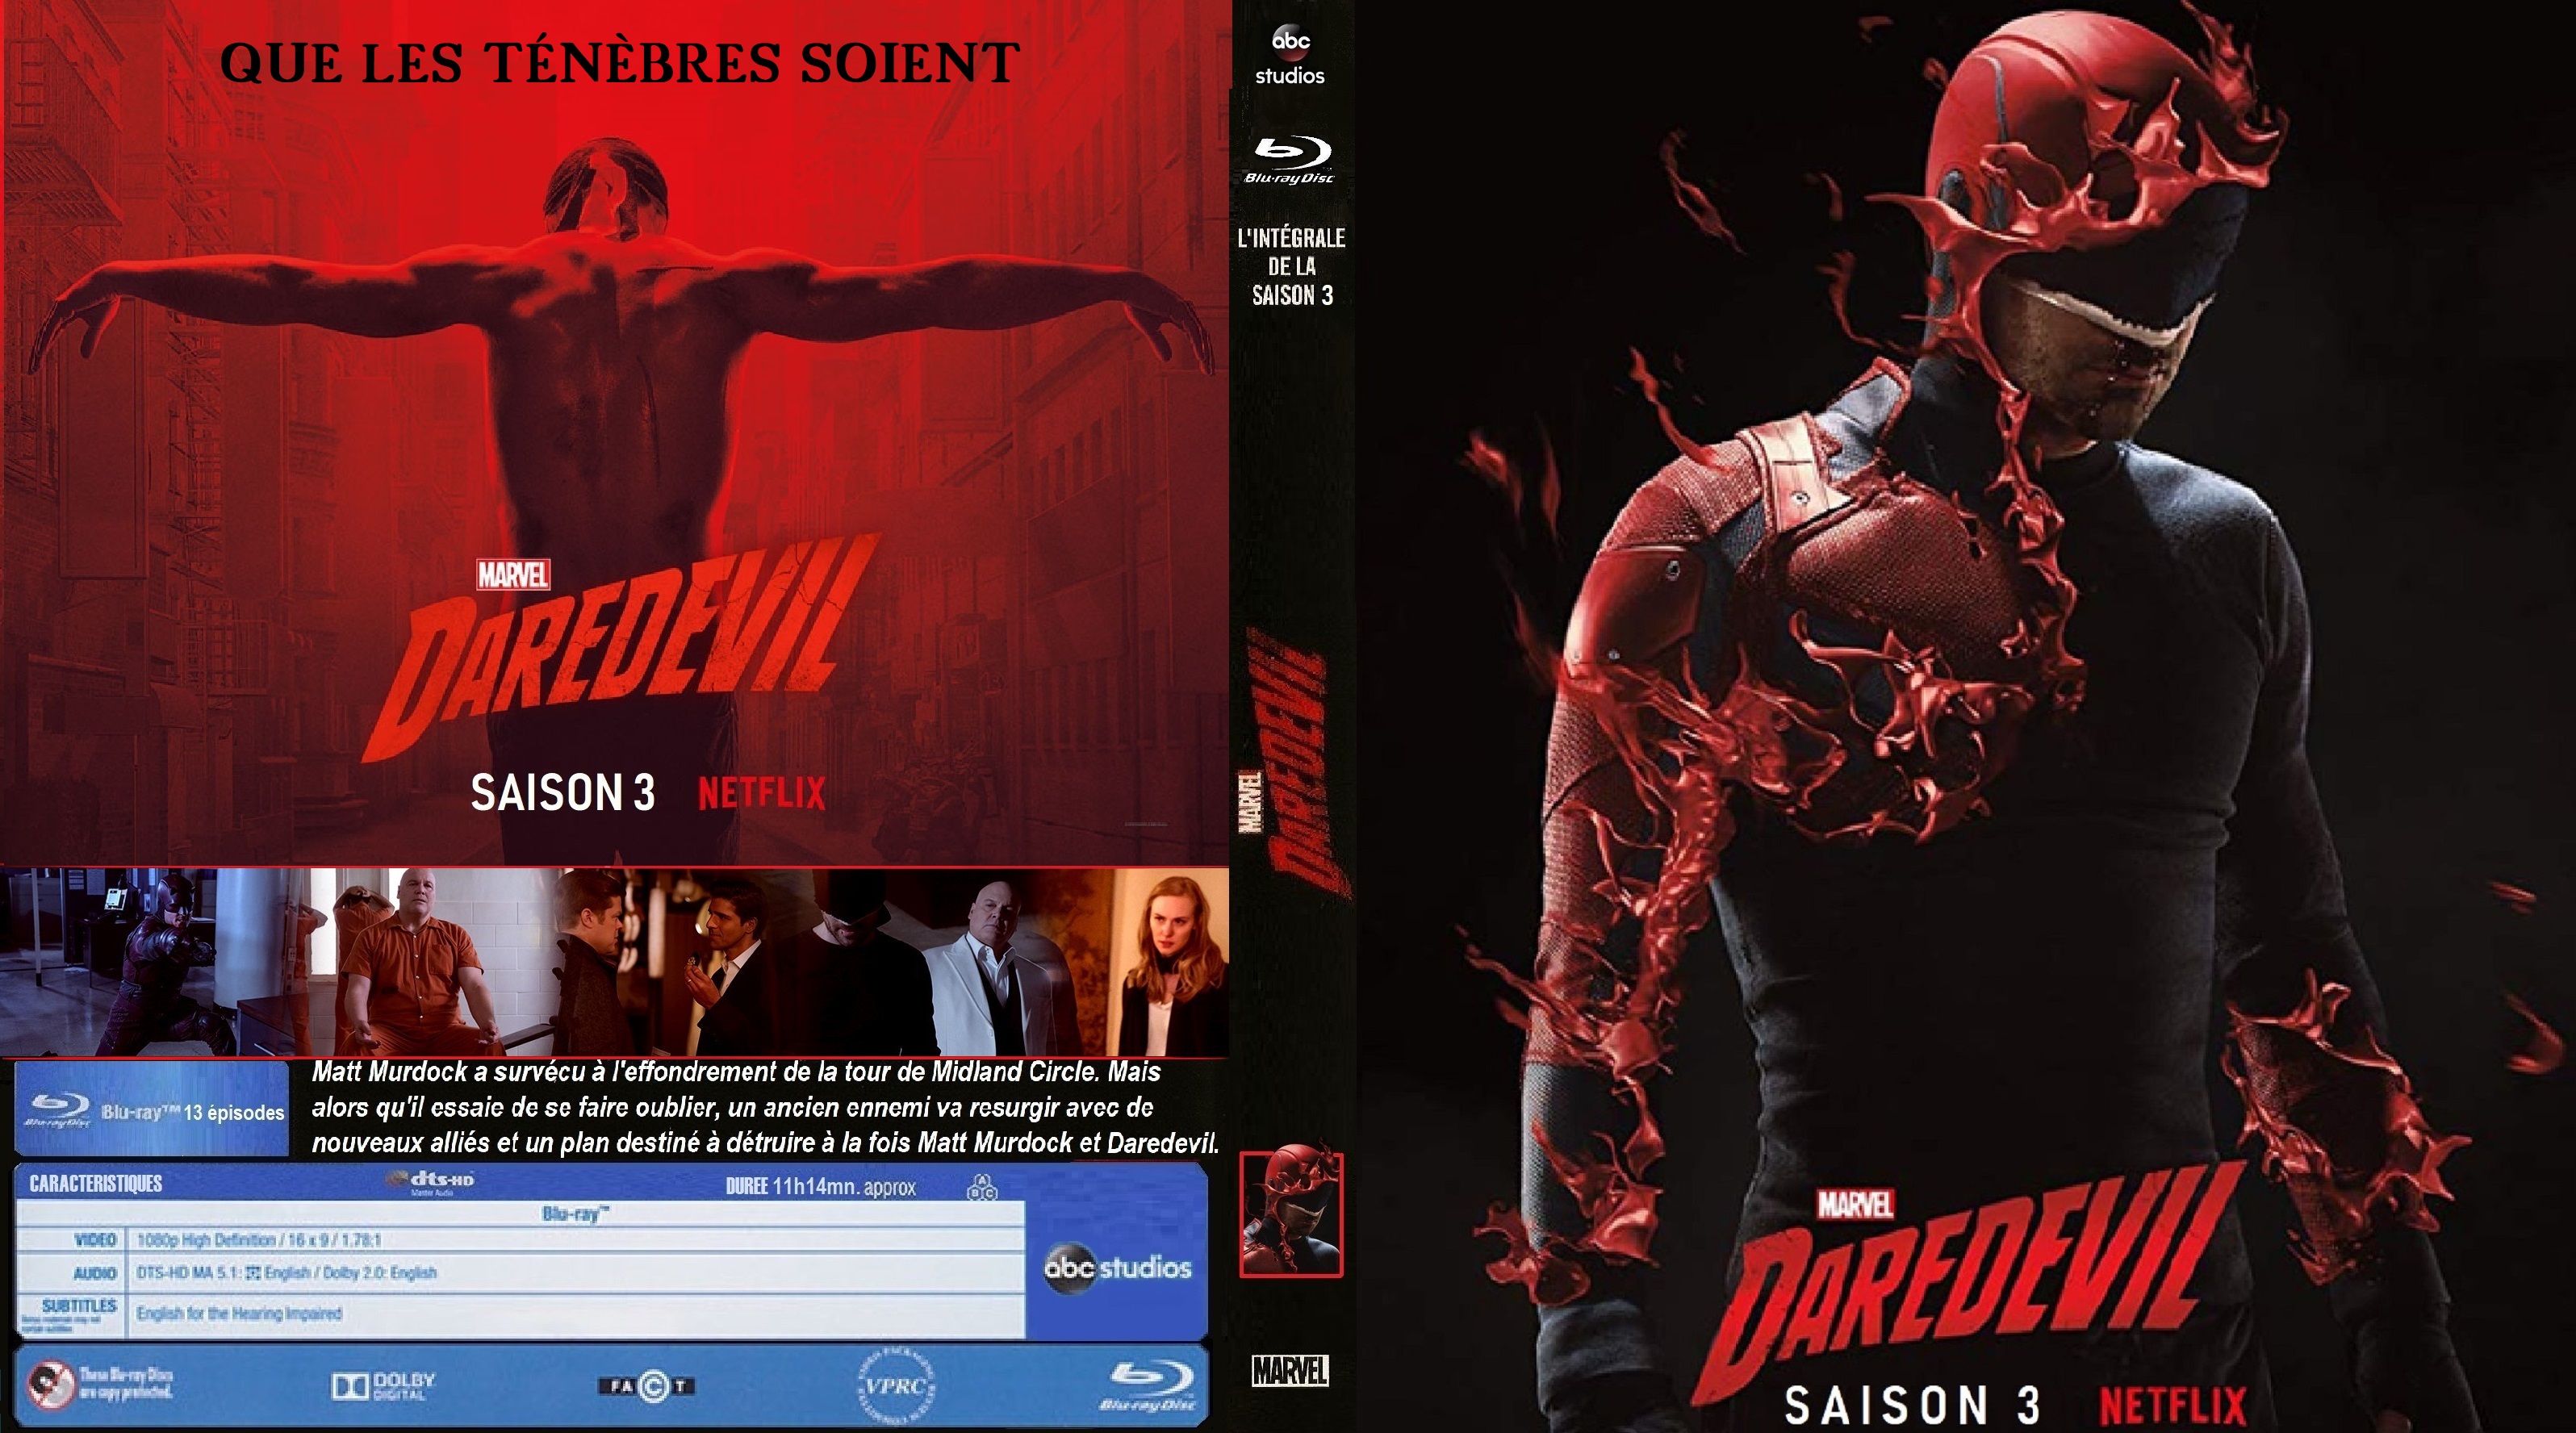 Jaquette DVD Daredevil saison 3 custom (BLU-RAY) v2